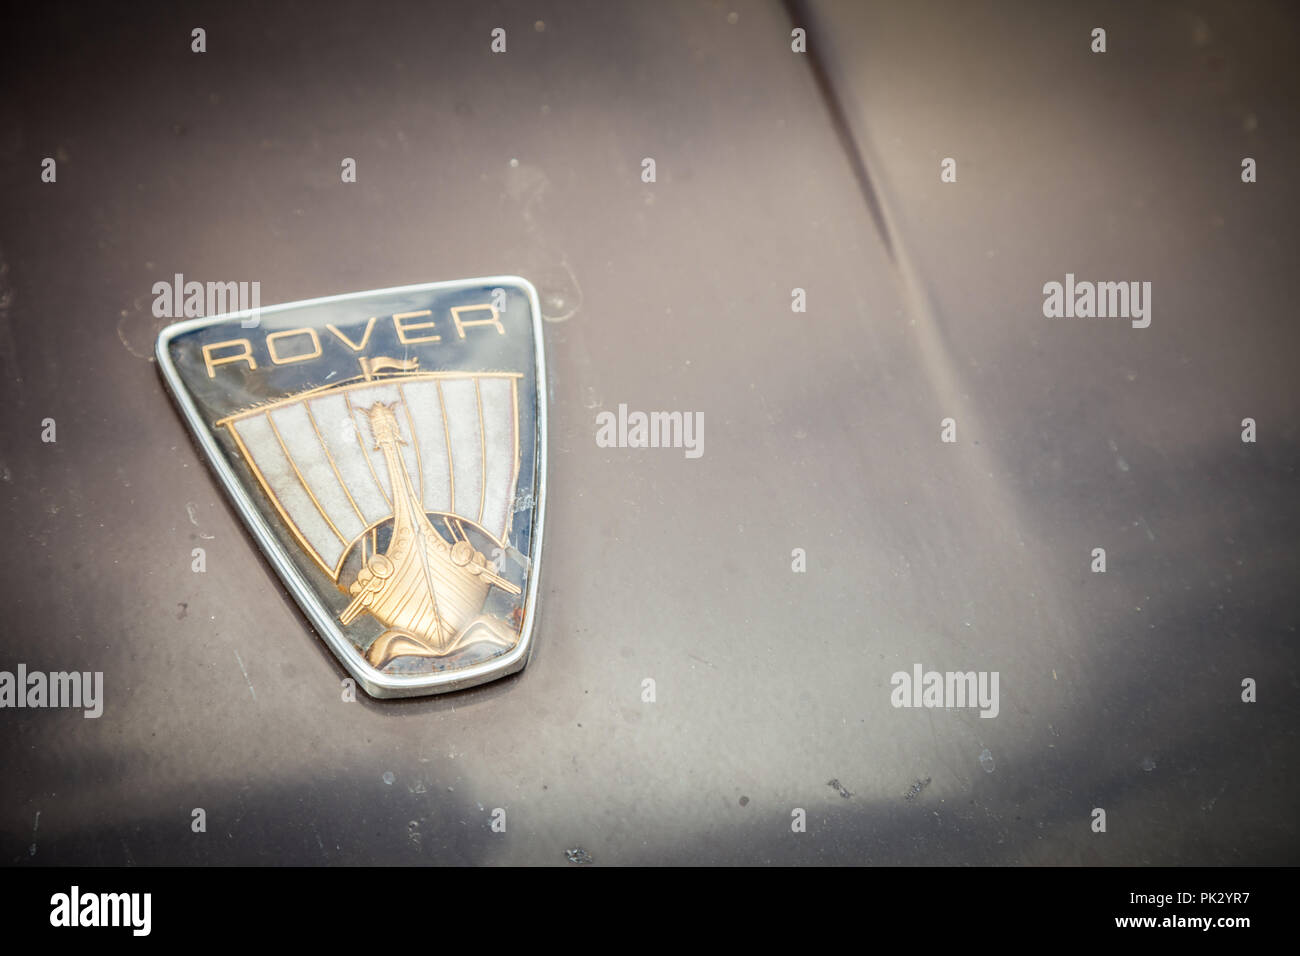 Rover car badge on bonnet or hood Stock Photo